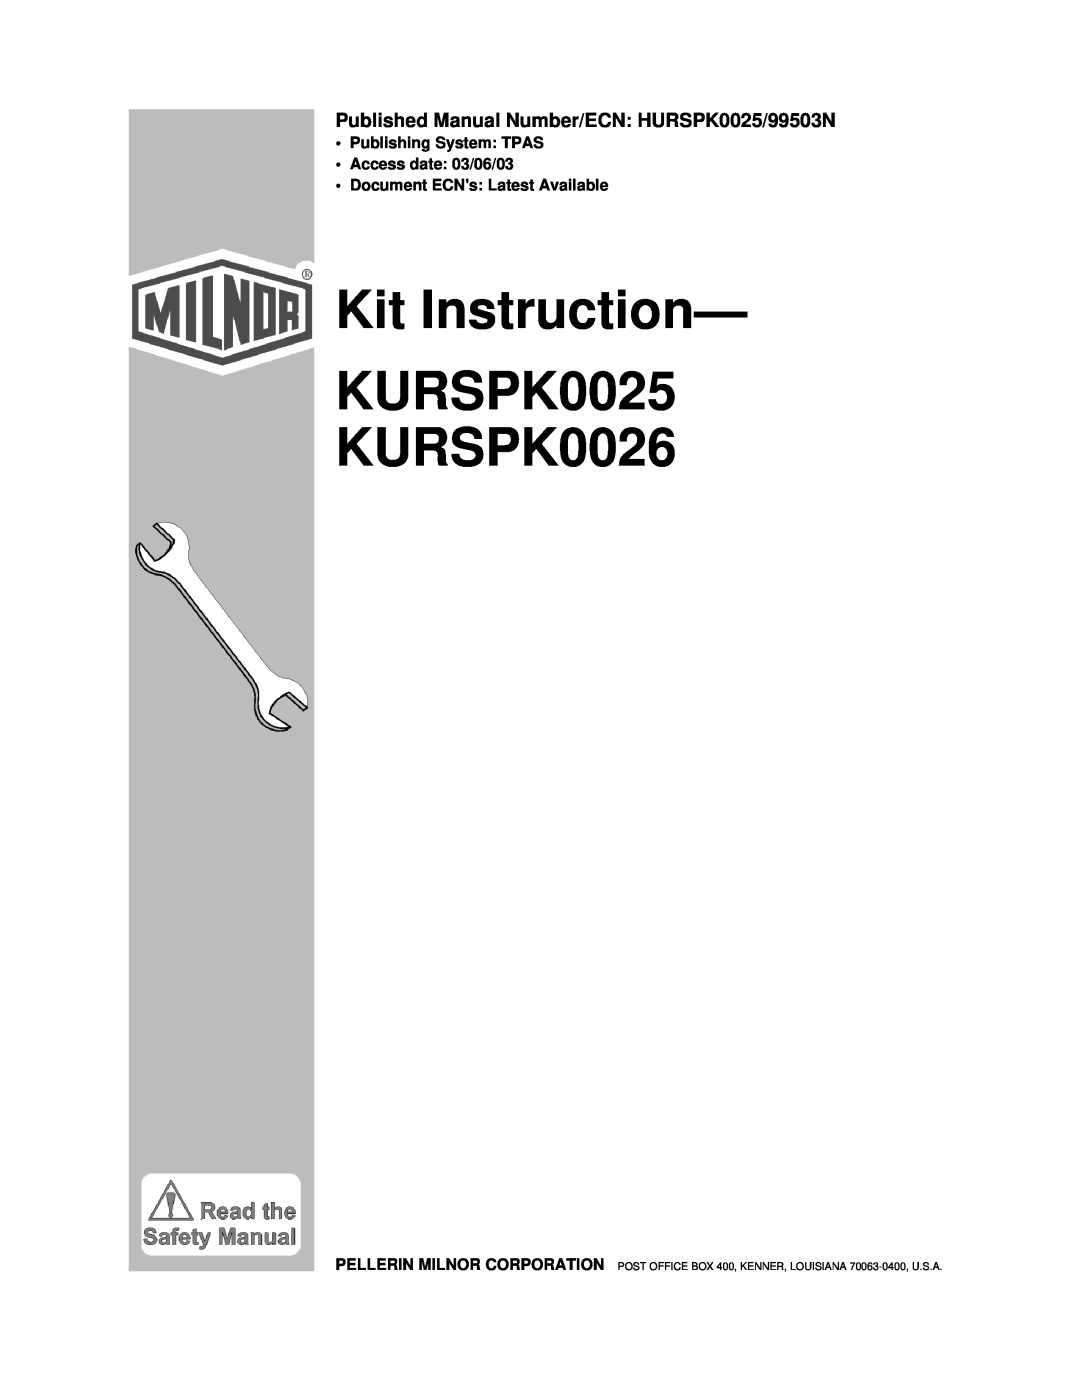 Milnor manual Kit Instruction KURSPK0025 KURSPK0026, Published Manual Number/ECN HURSPK0025/99503N 